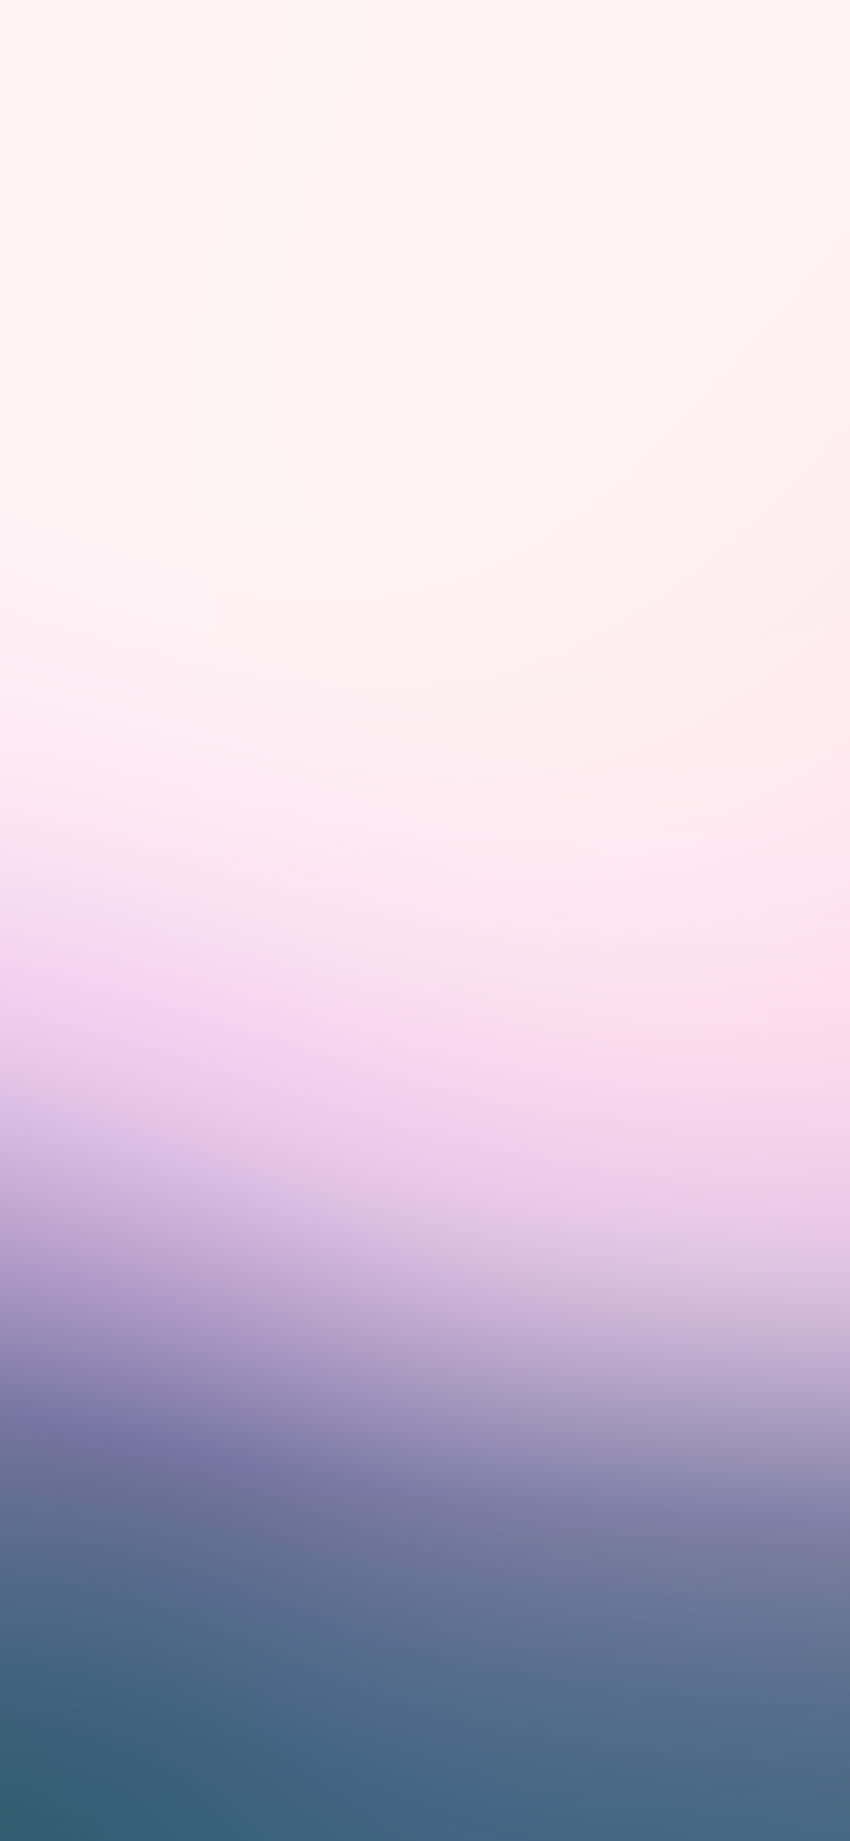 Unfondo Degradado En Tonos Rosados Y Púrpuras. Fondo de pantalla